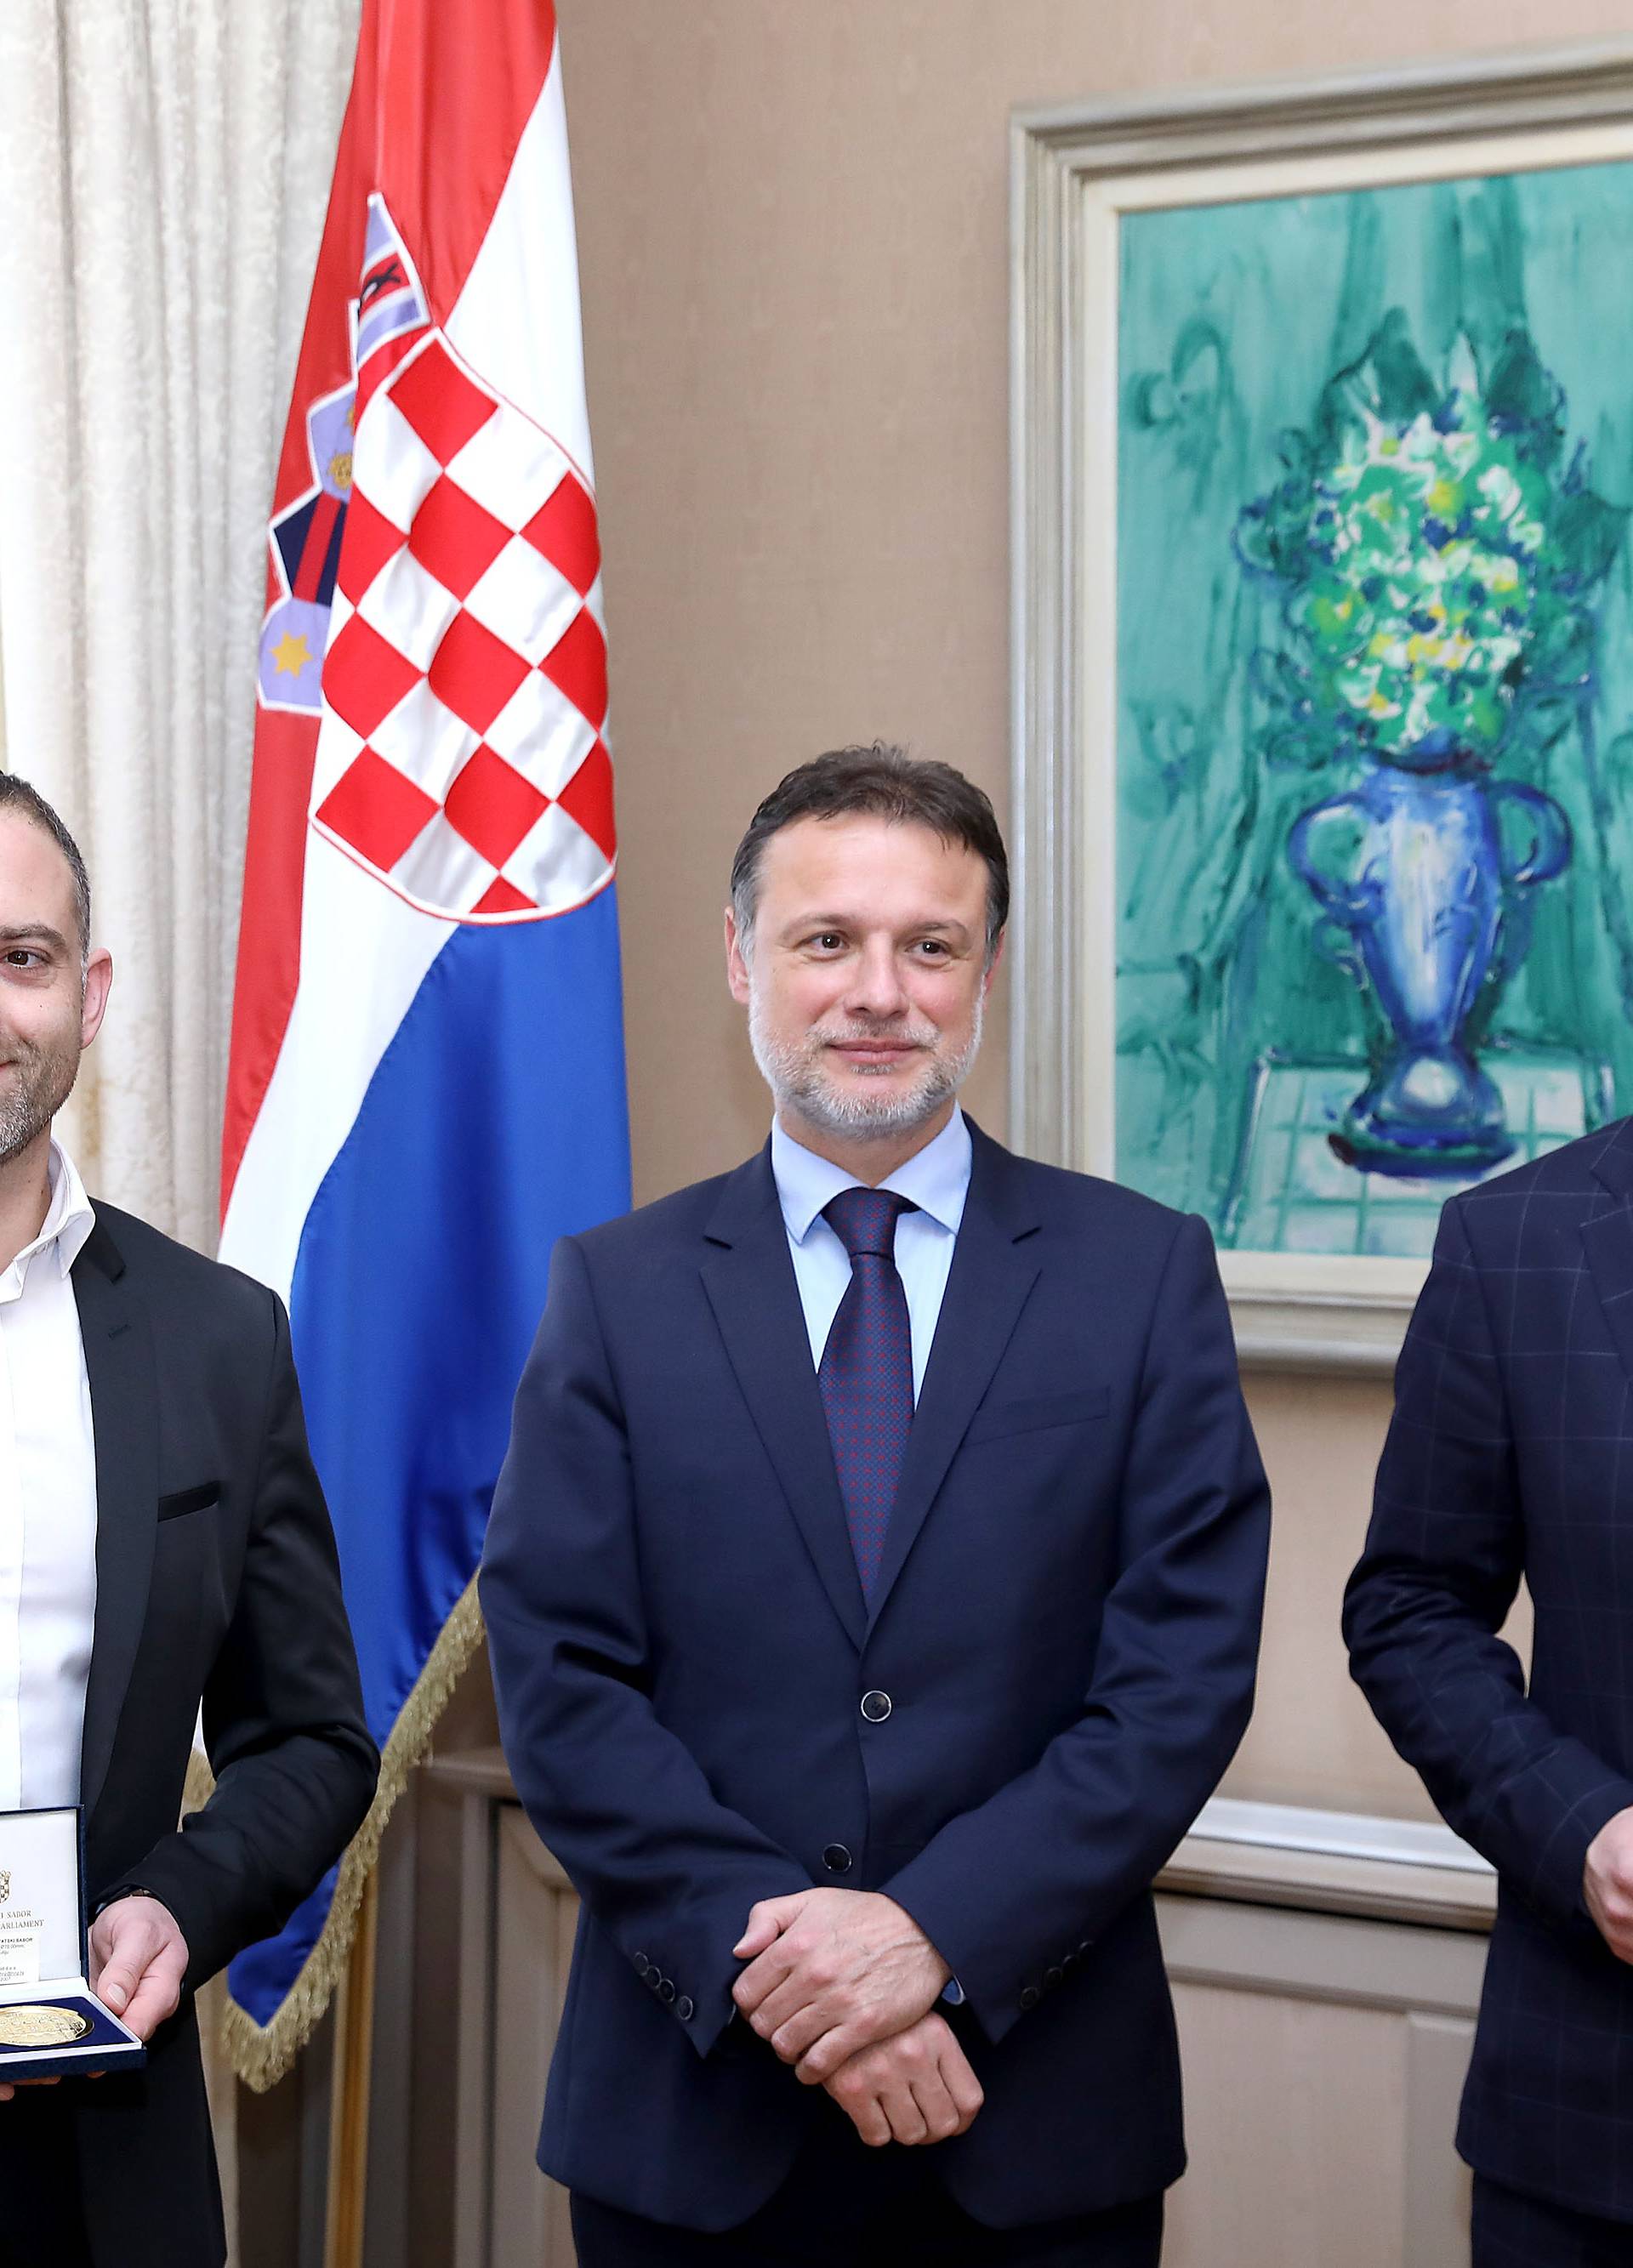 Zagreb: JandrokoviÄ primio rukometne suce koji su sudili finale Svjetskog prvenstva